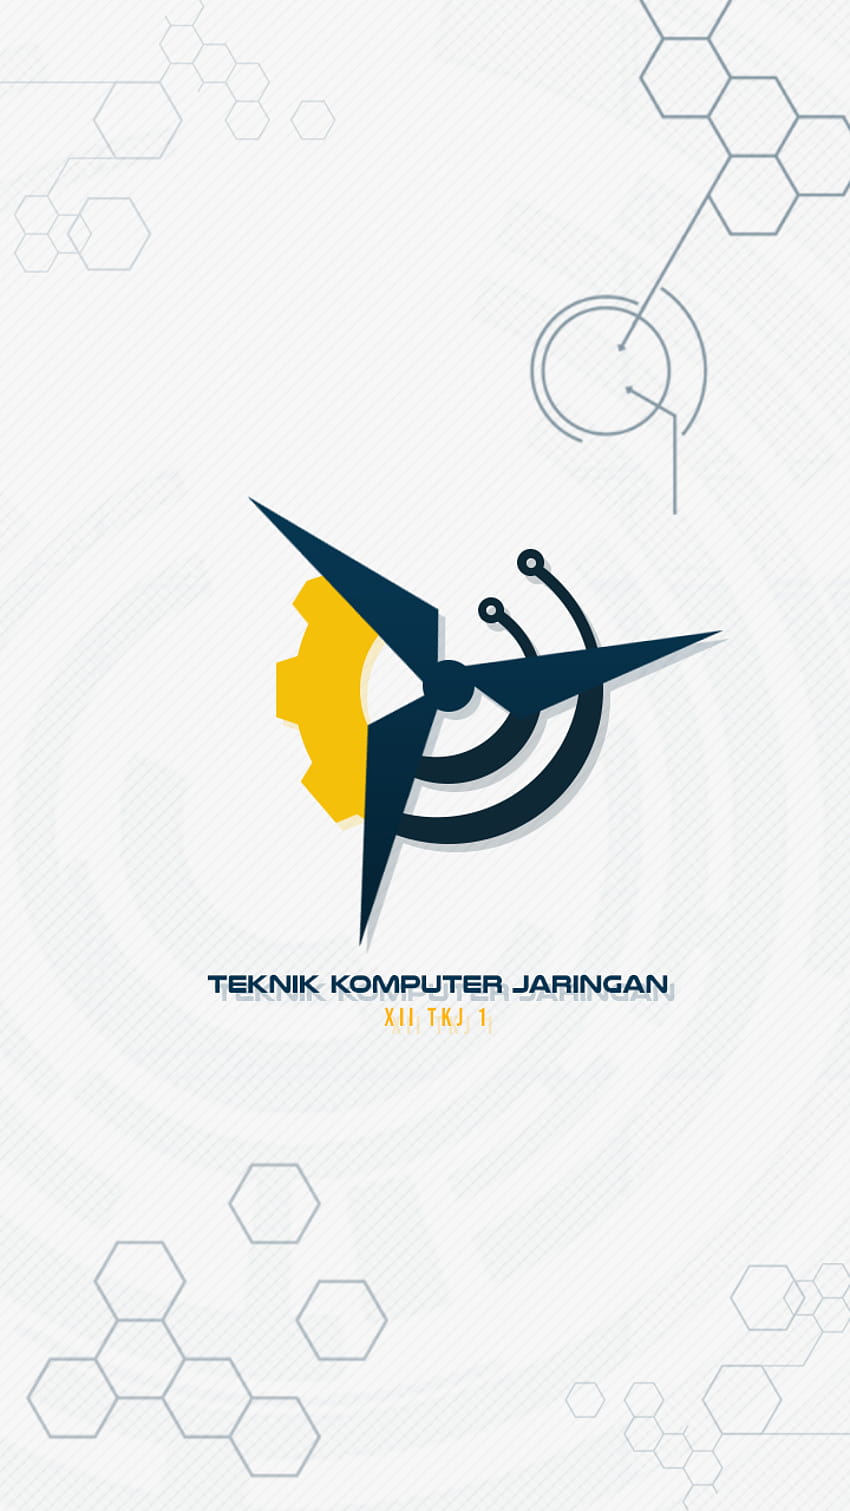 Teknik Komputer Jaringan Logo HD phone wallpaper